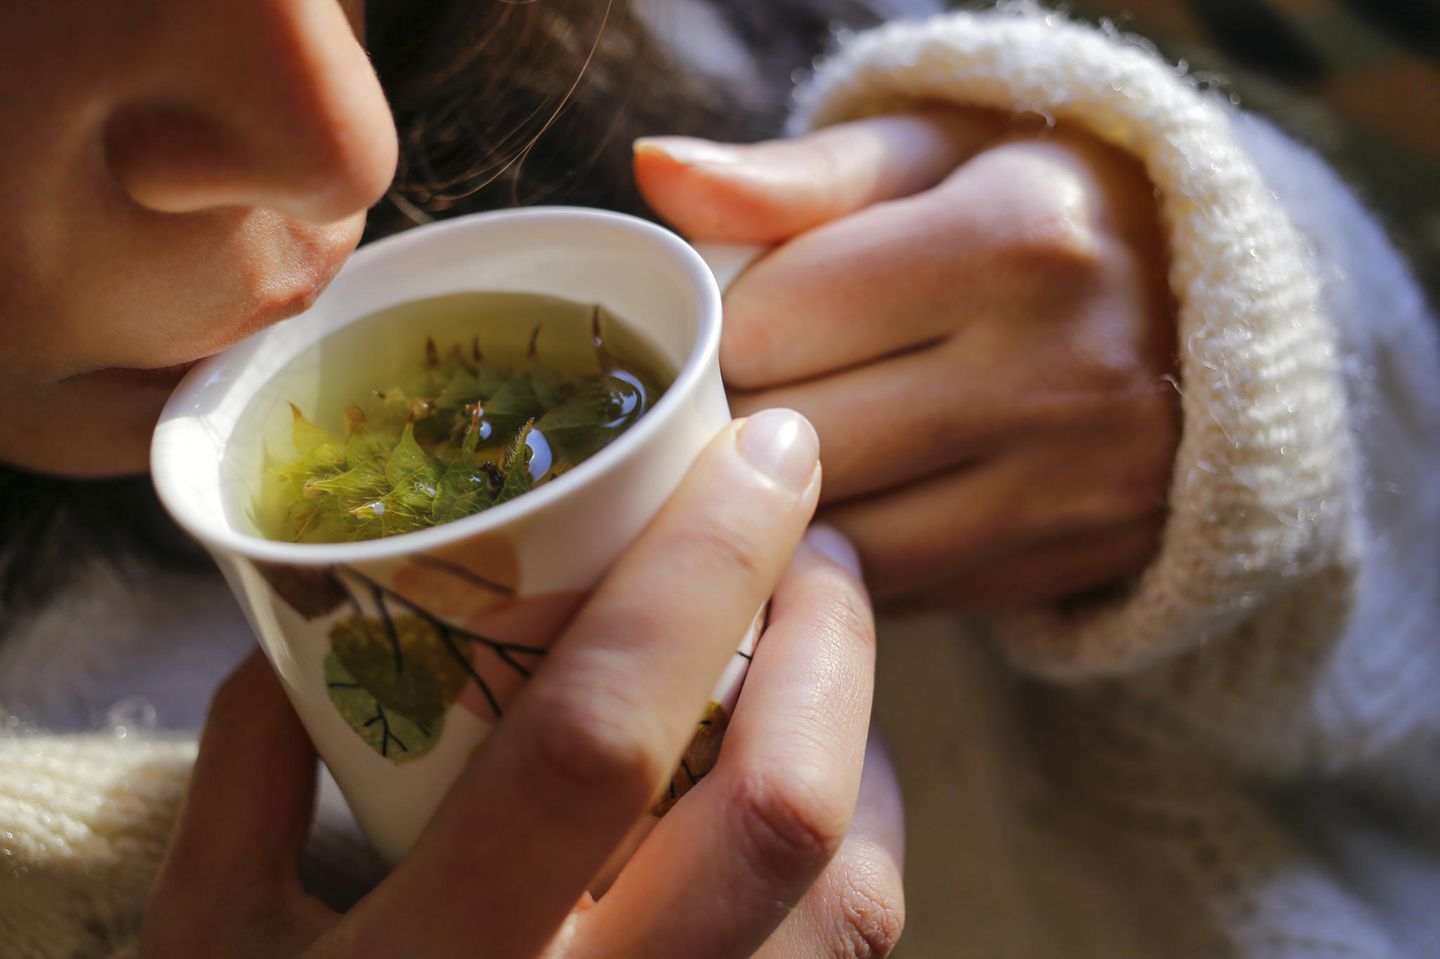 Hausmittel gegen Magenschleimhautentzündung: Grünen Tee trinken